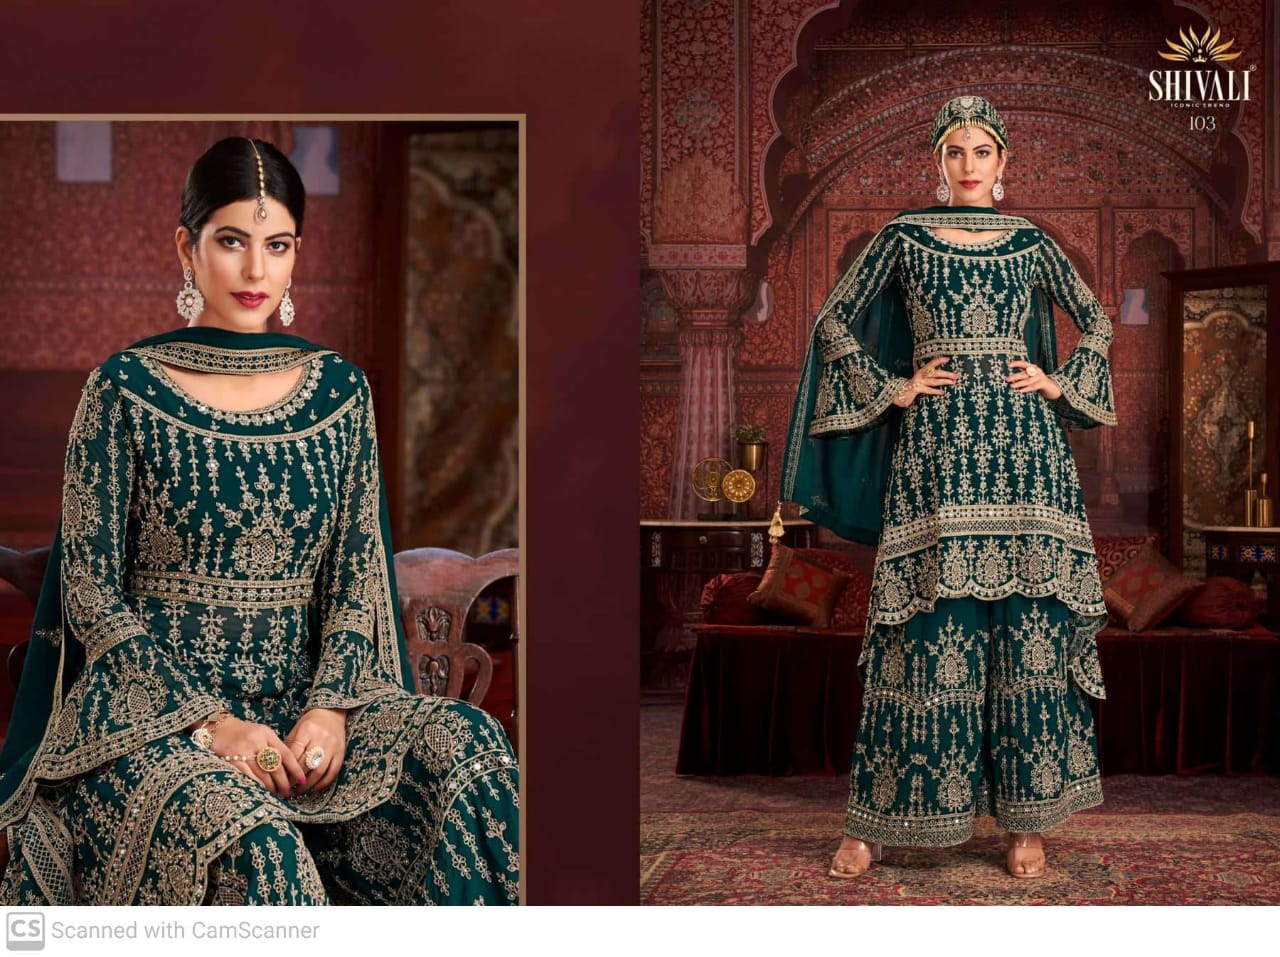 Shivali Fashion Halime Sultan 103